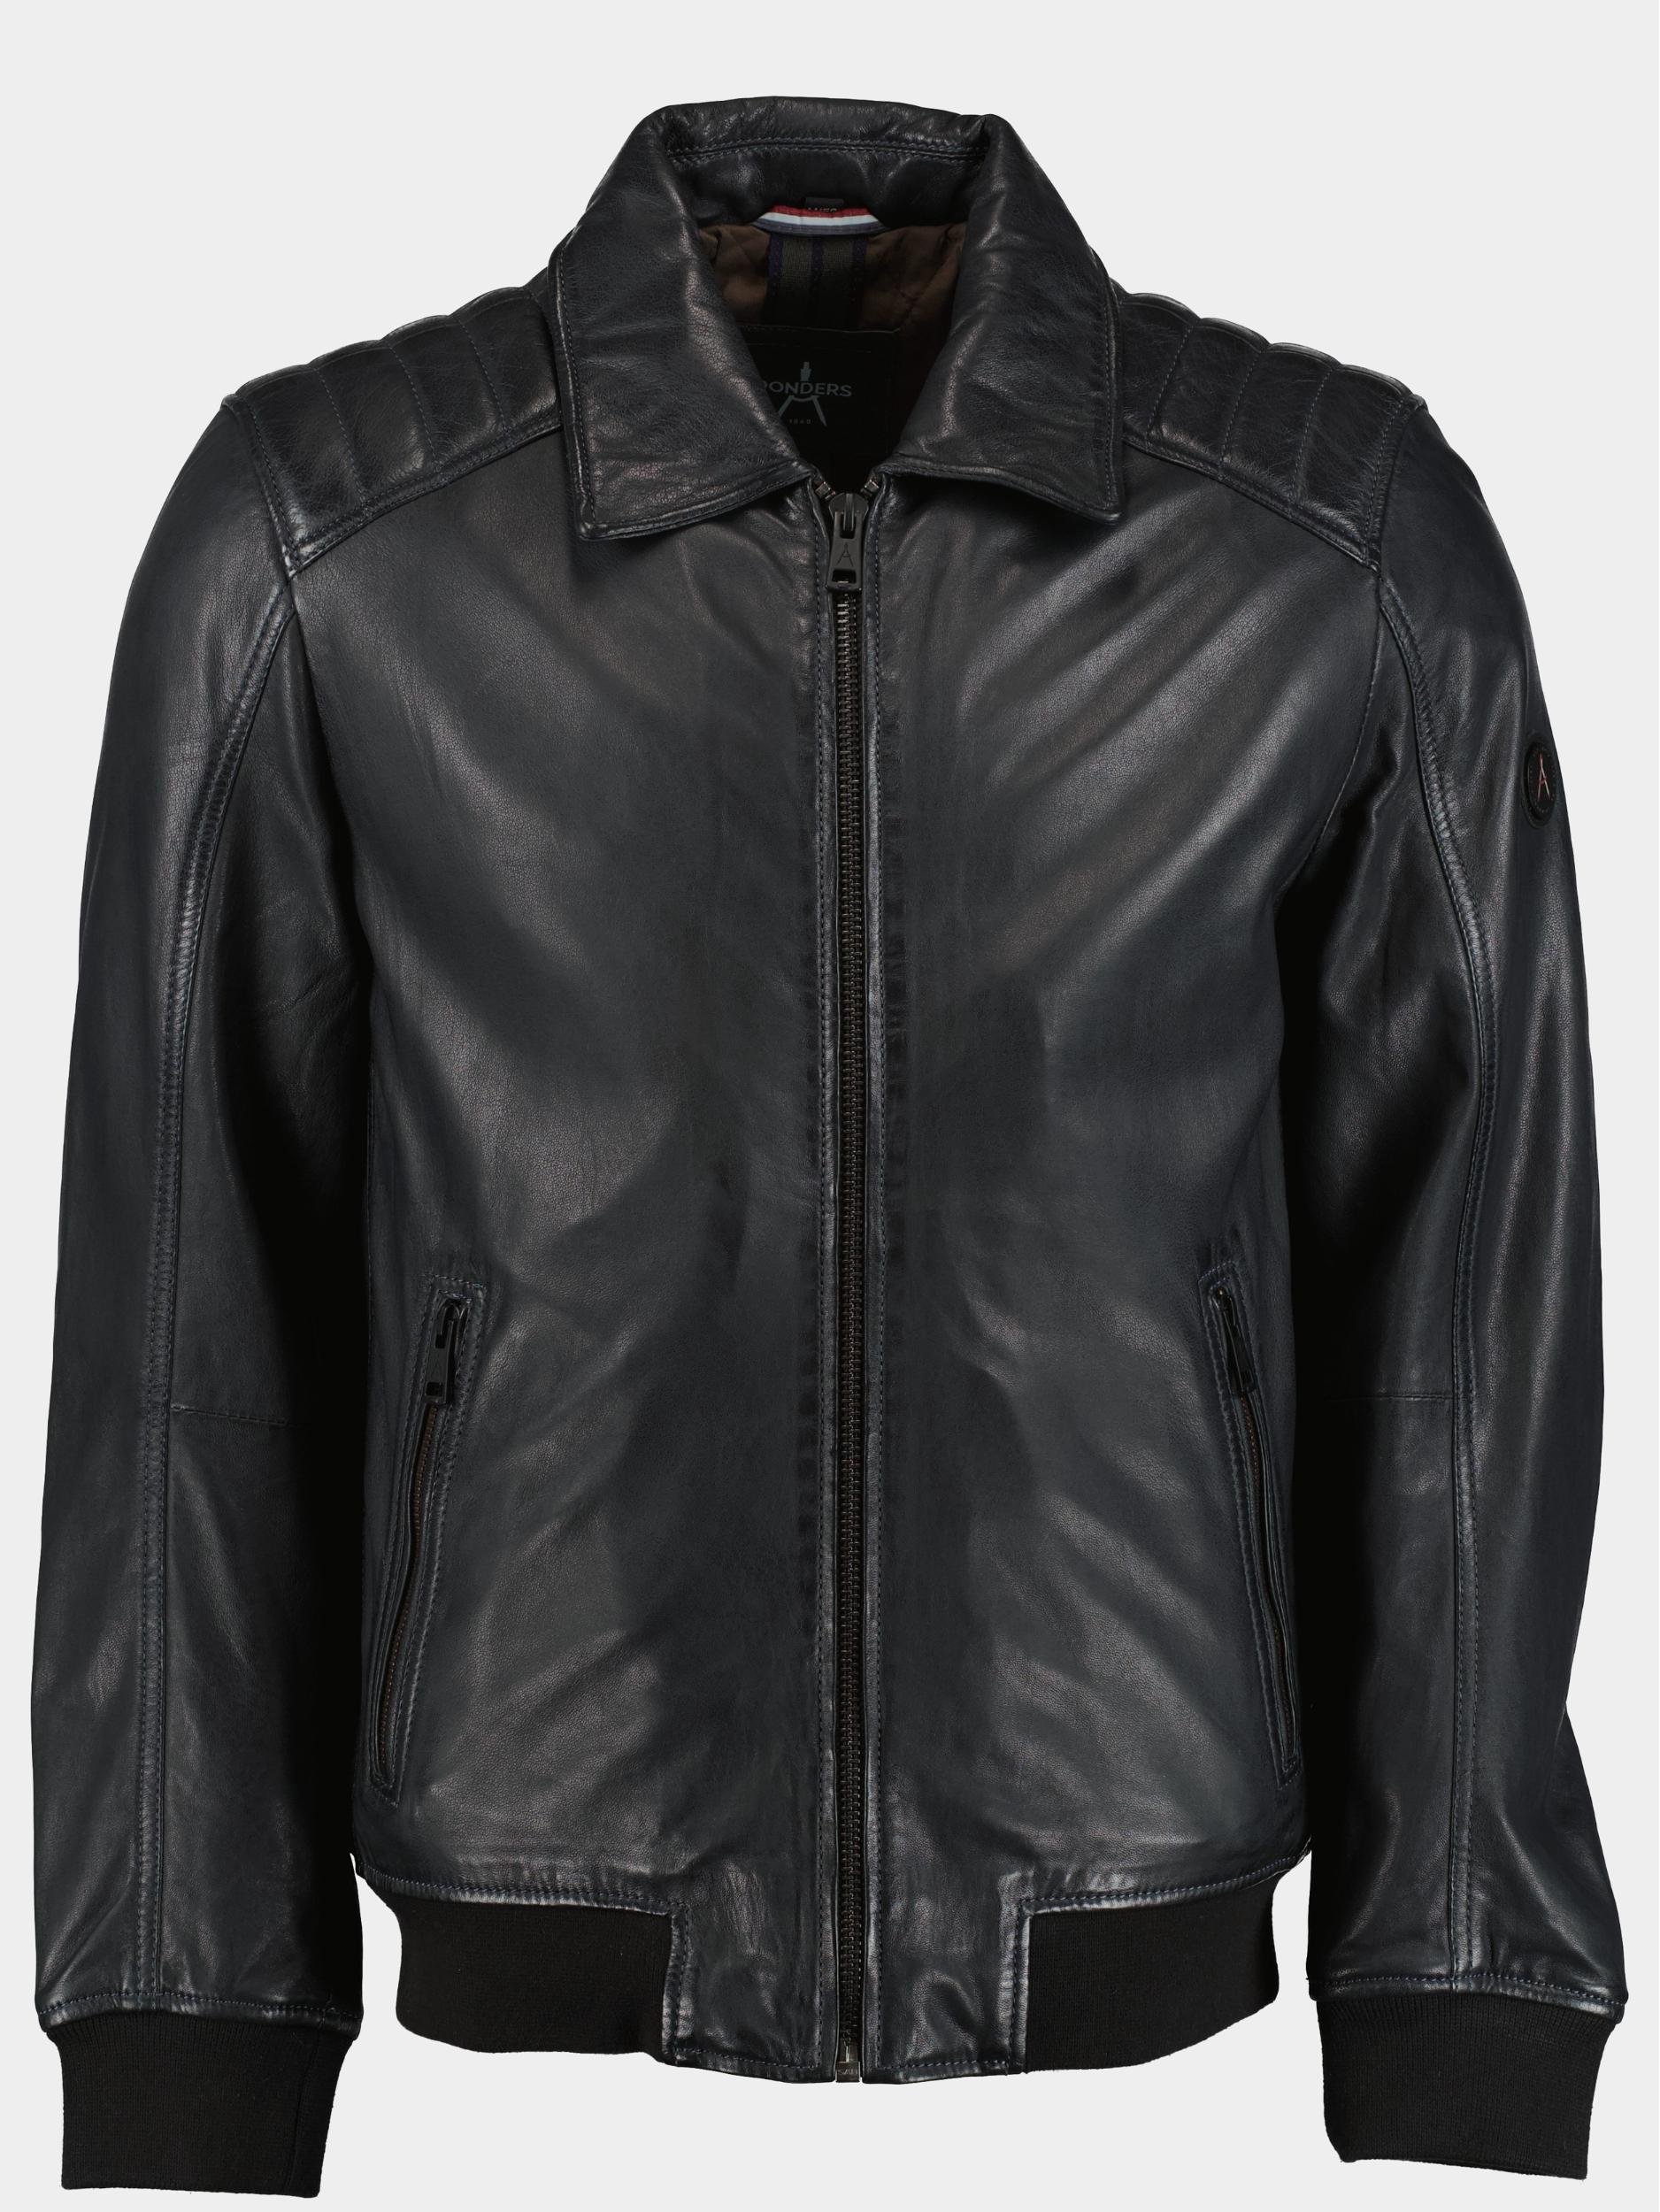 Afbeelding van DNR Lederen jack leather jacket 52328/790